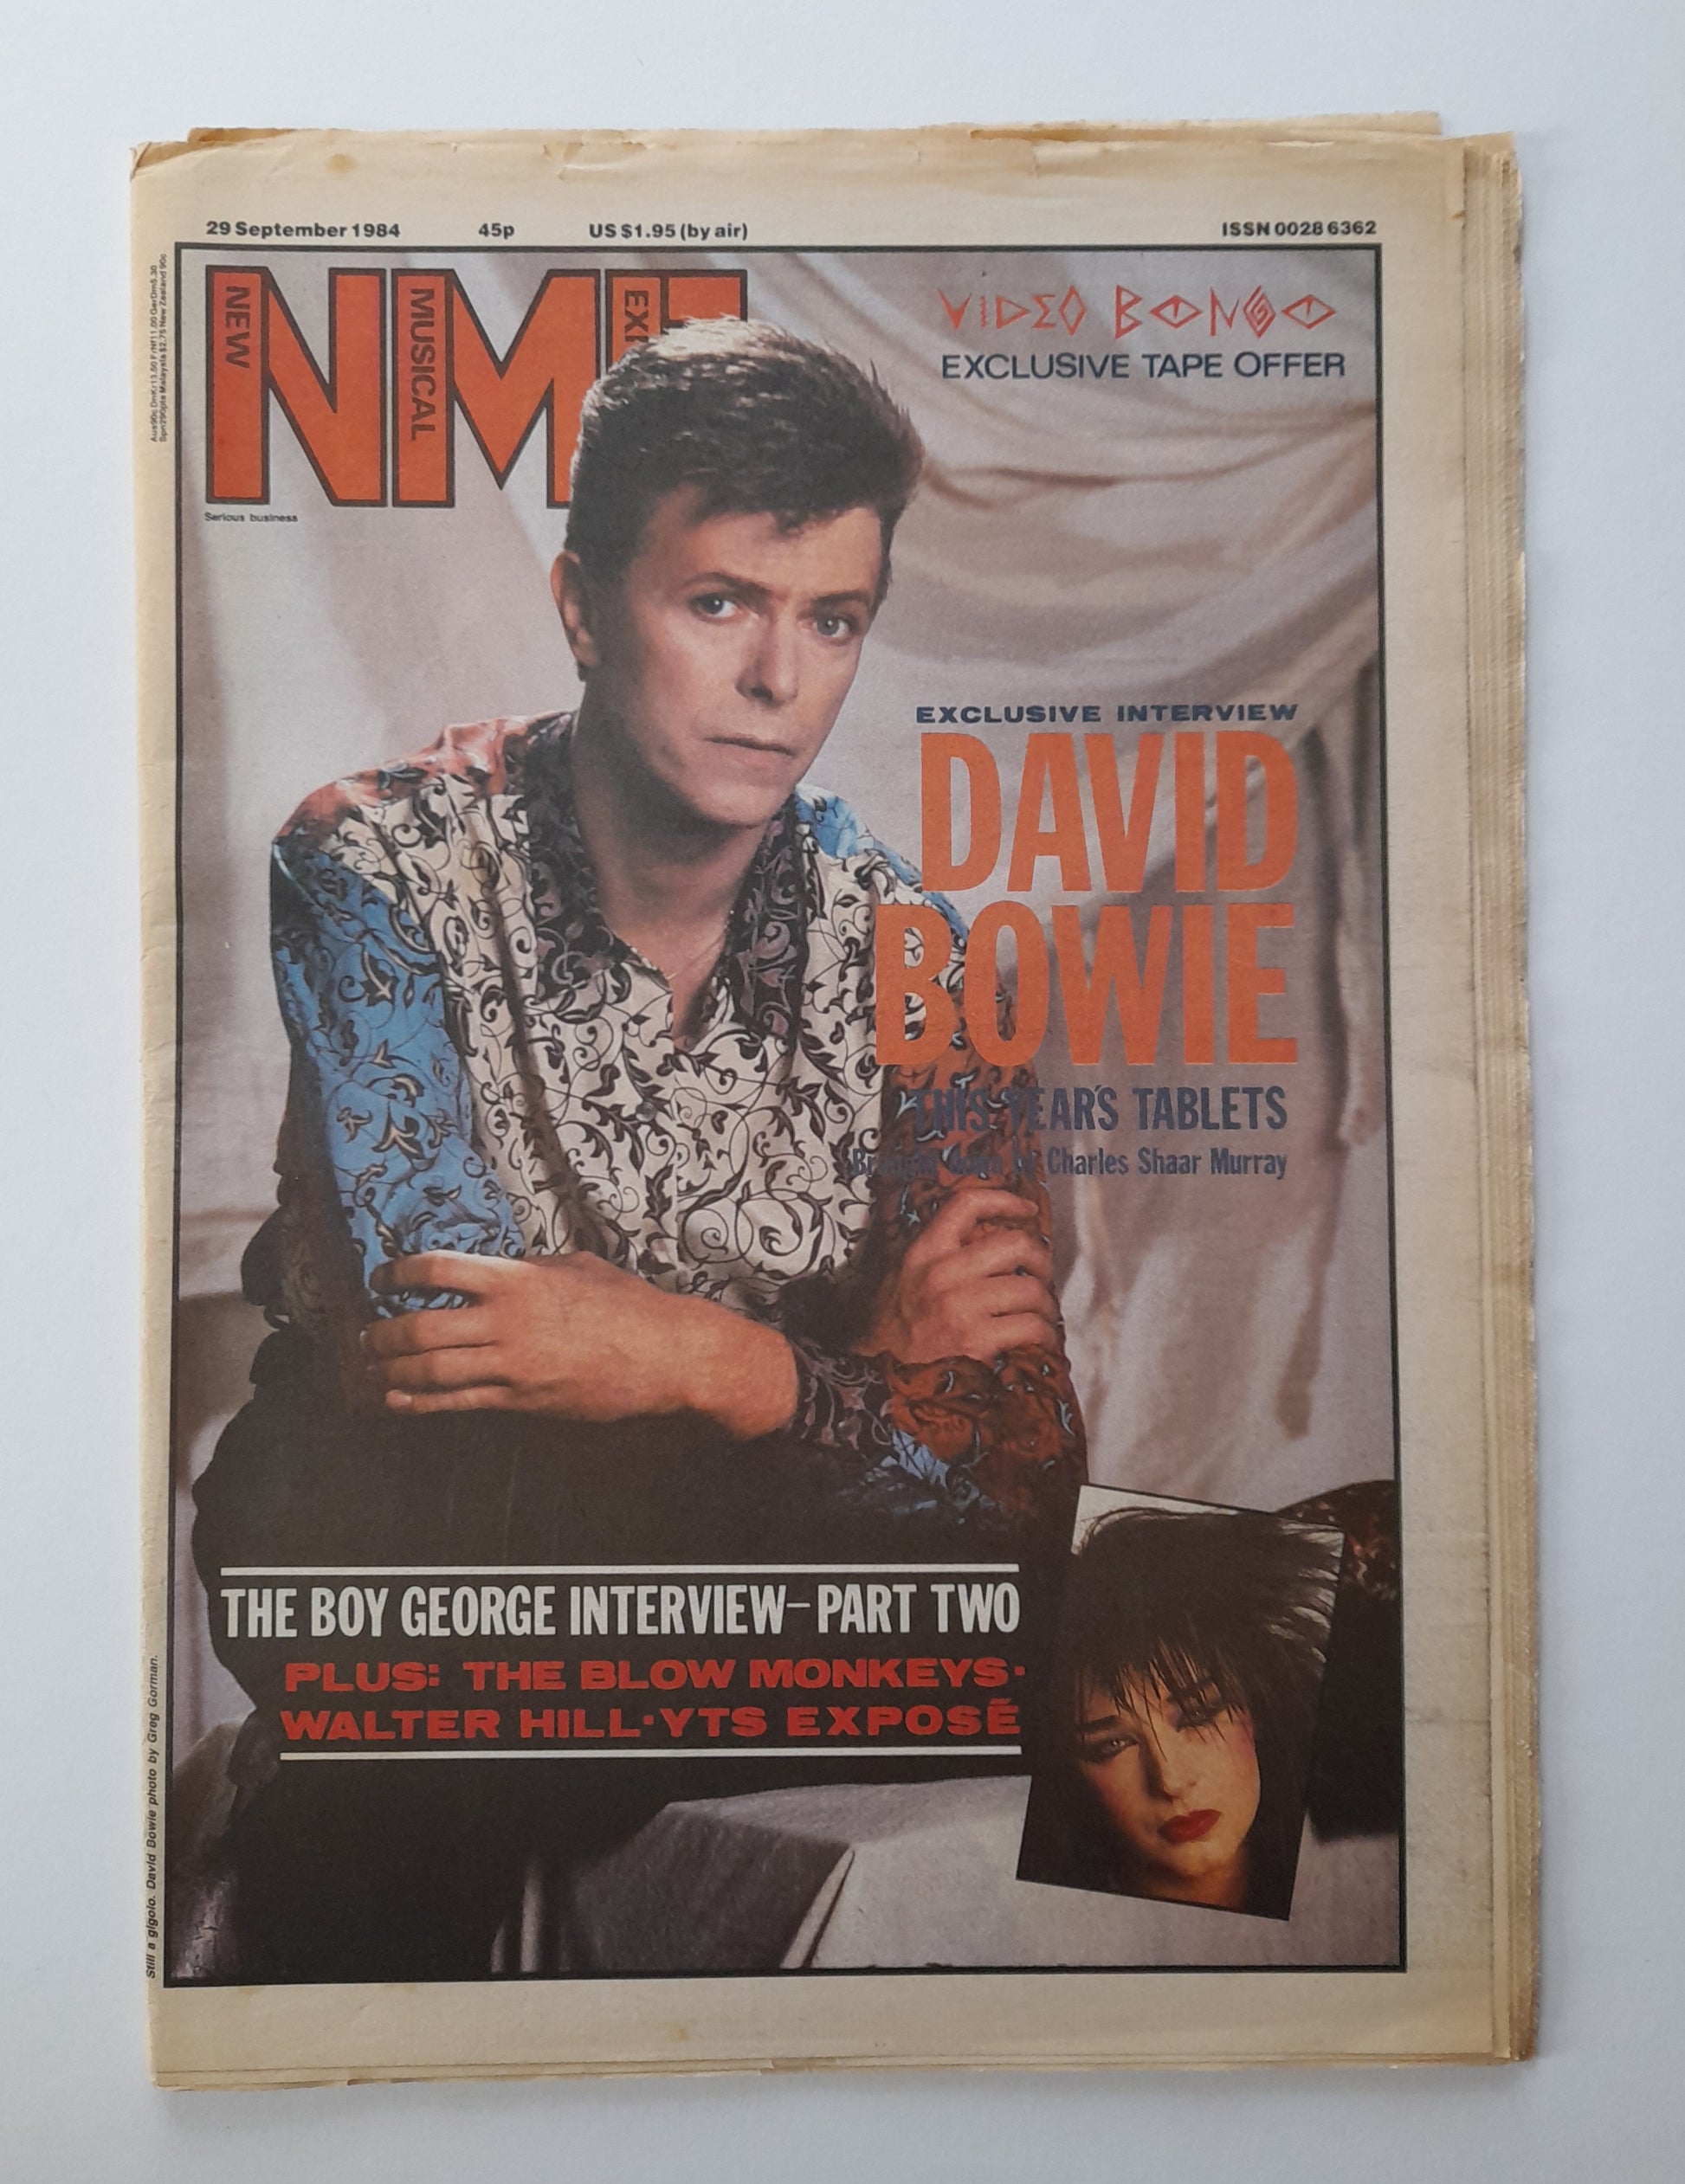 NME Magazine 29 September 1984 - David Bowie Media 1 of 1